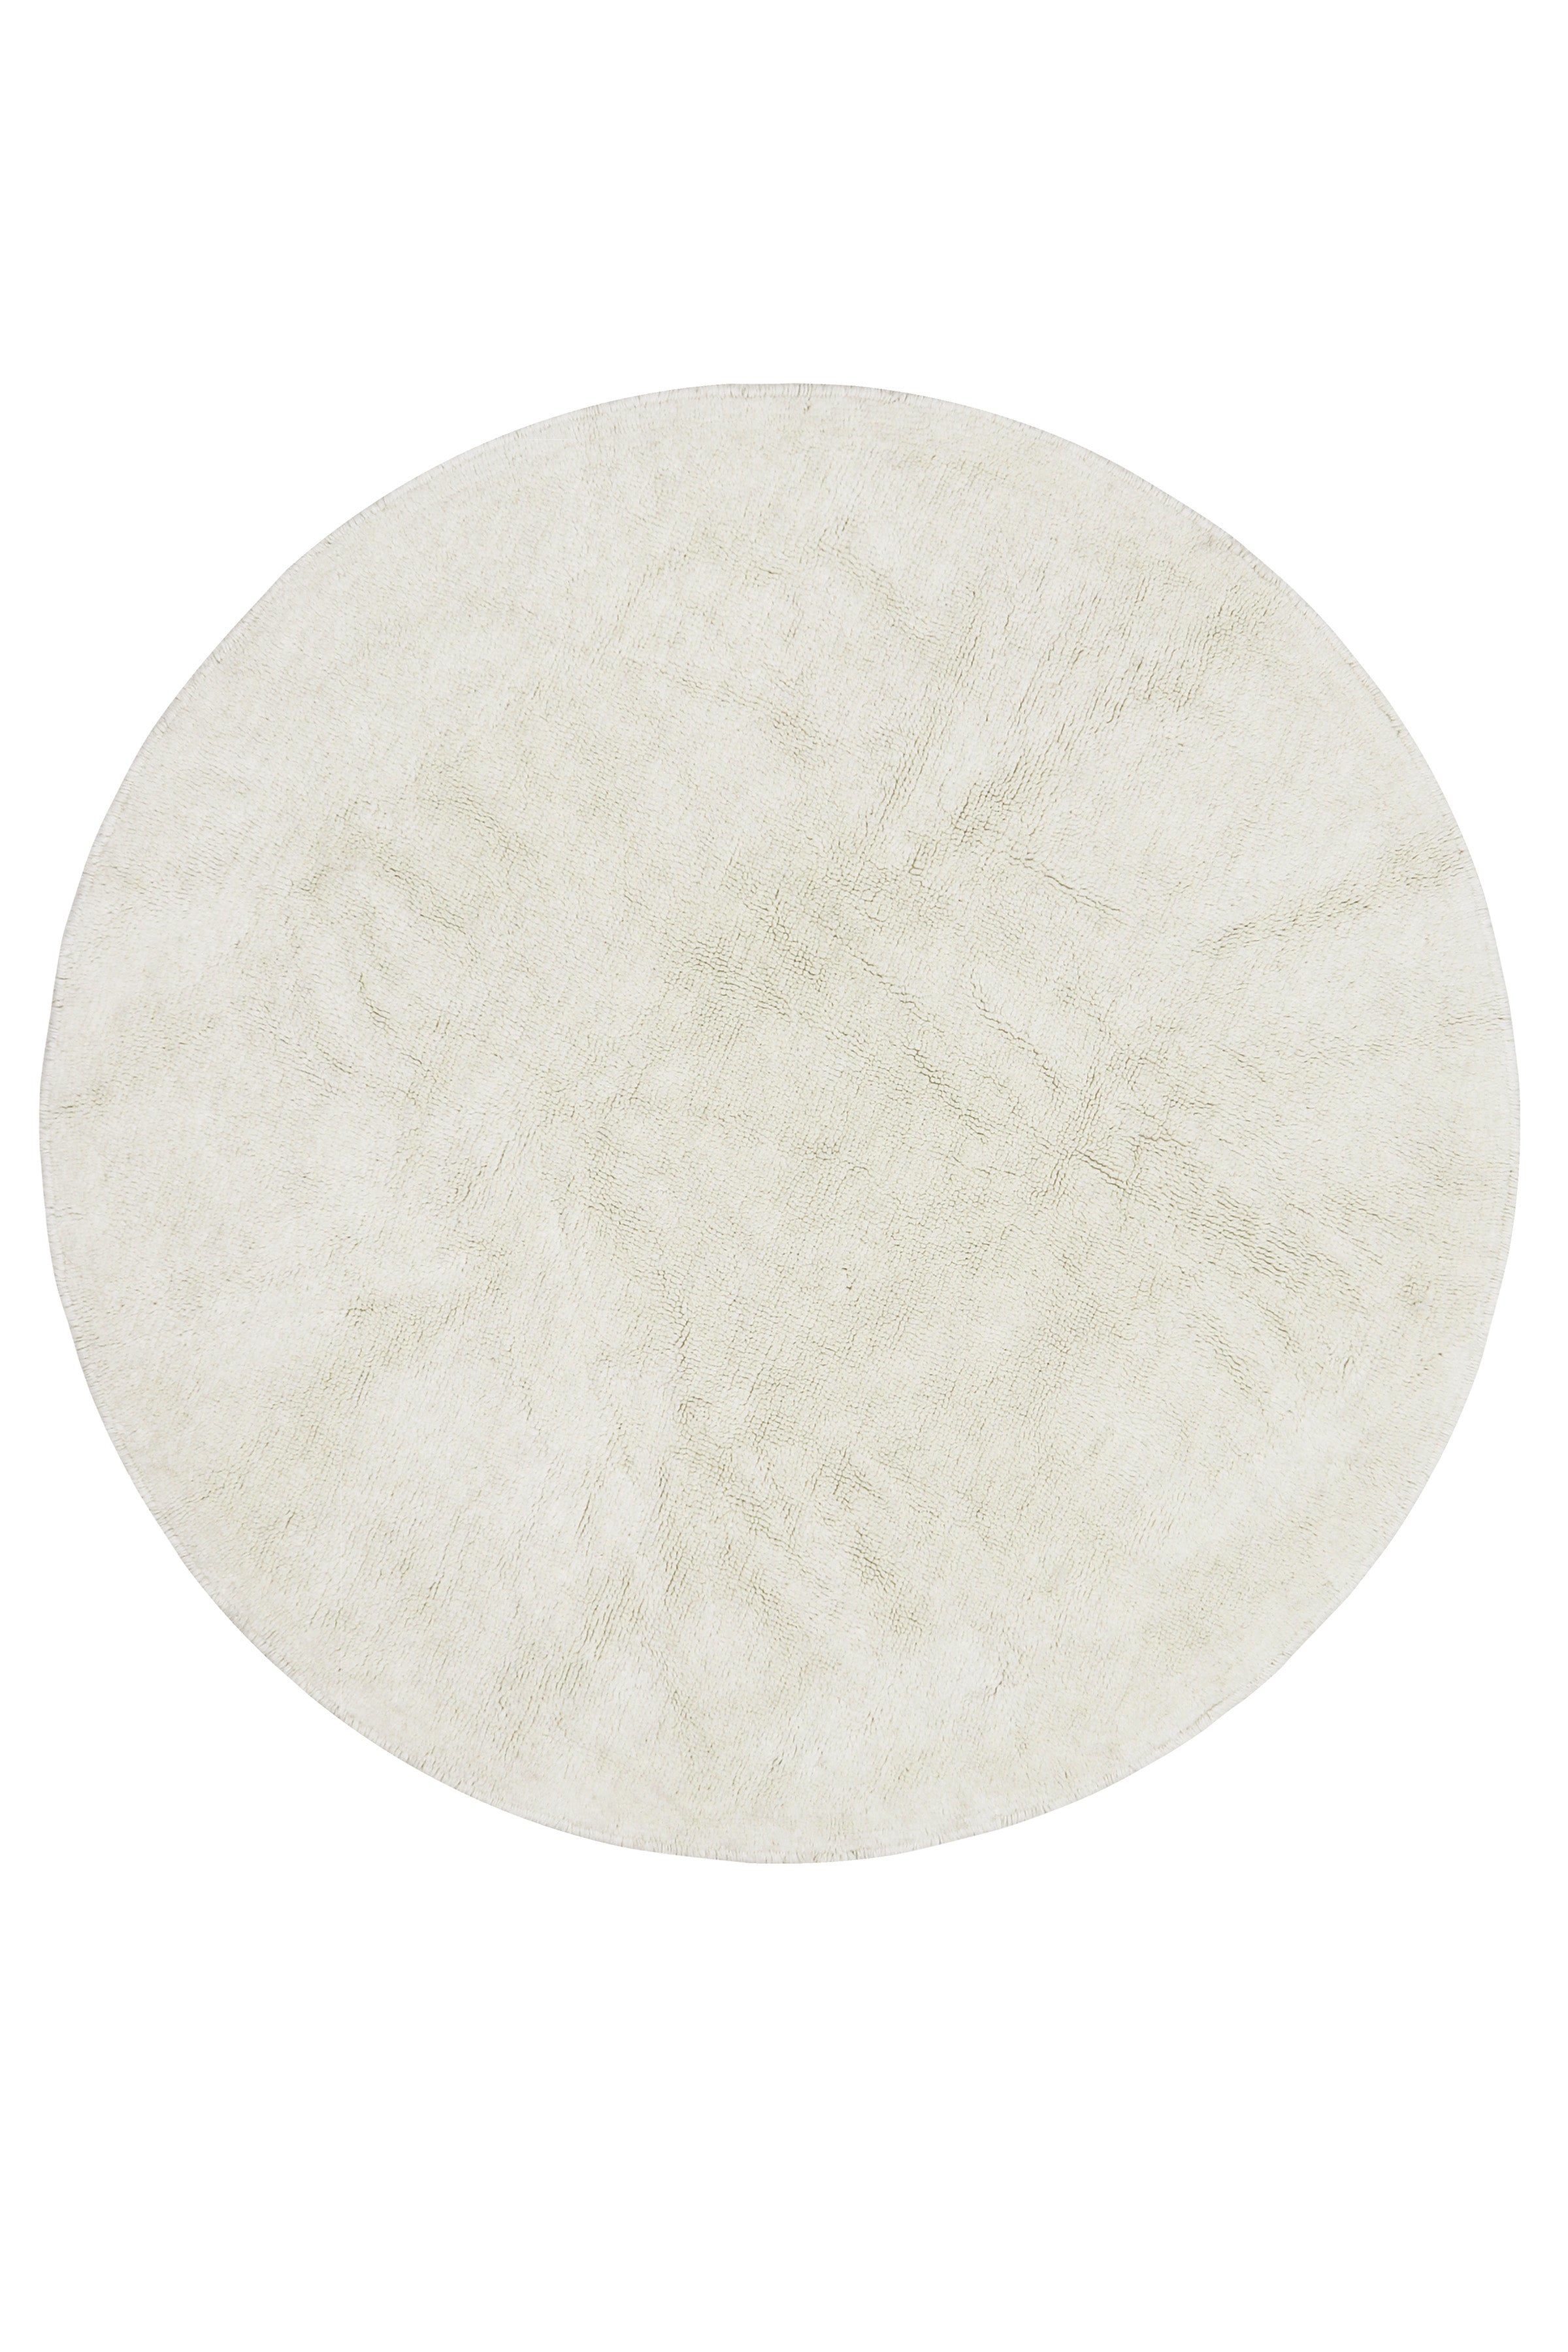 Plain cream round wool rug with soft pile